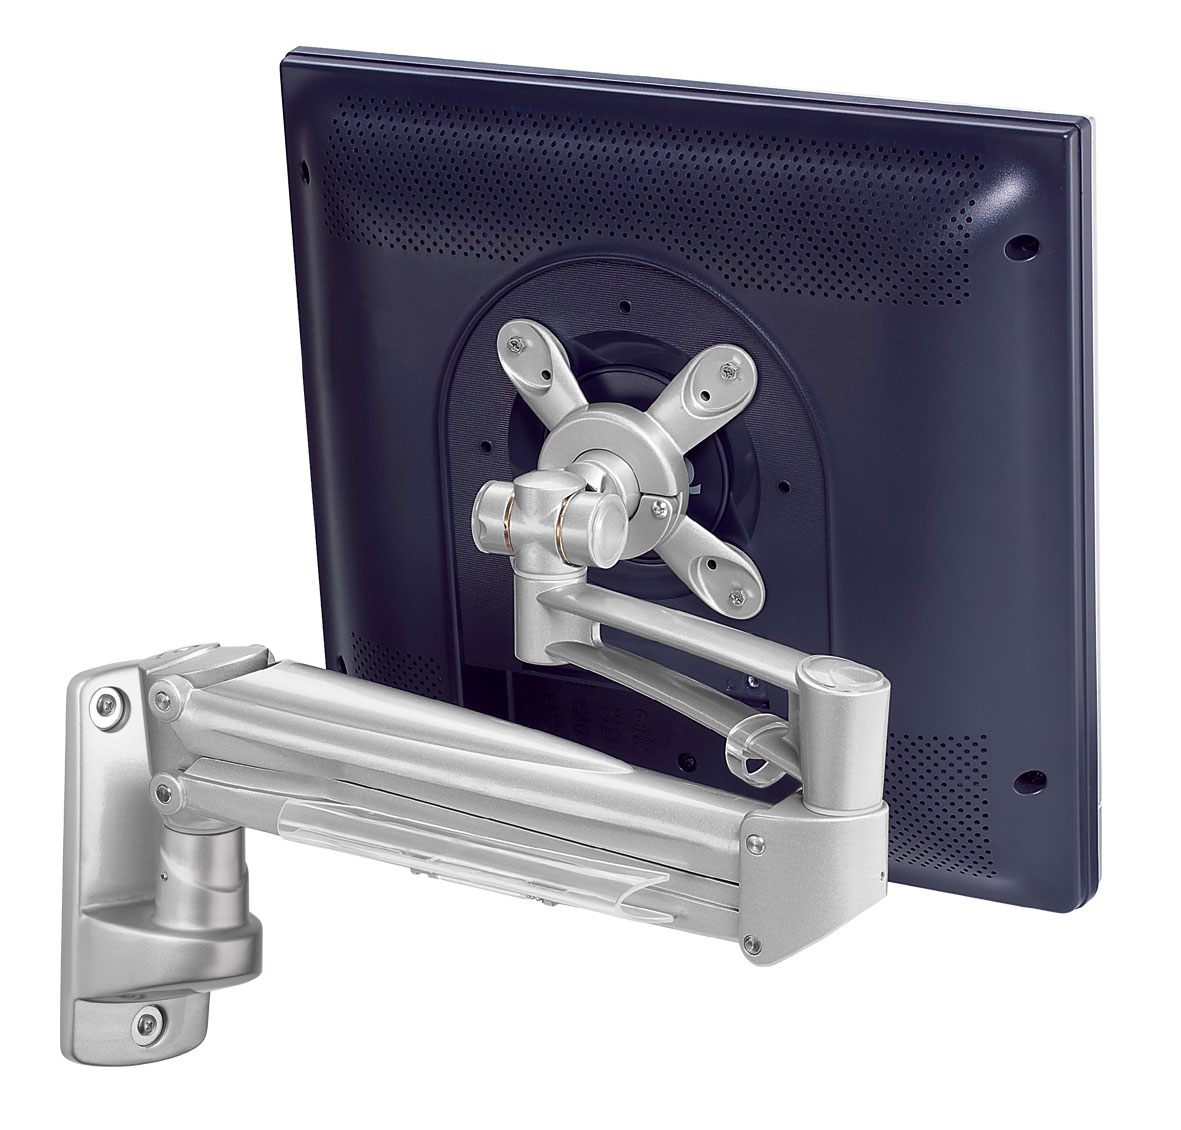 Ergonomic single wall mount gas monitor arm UK